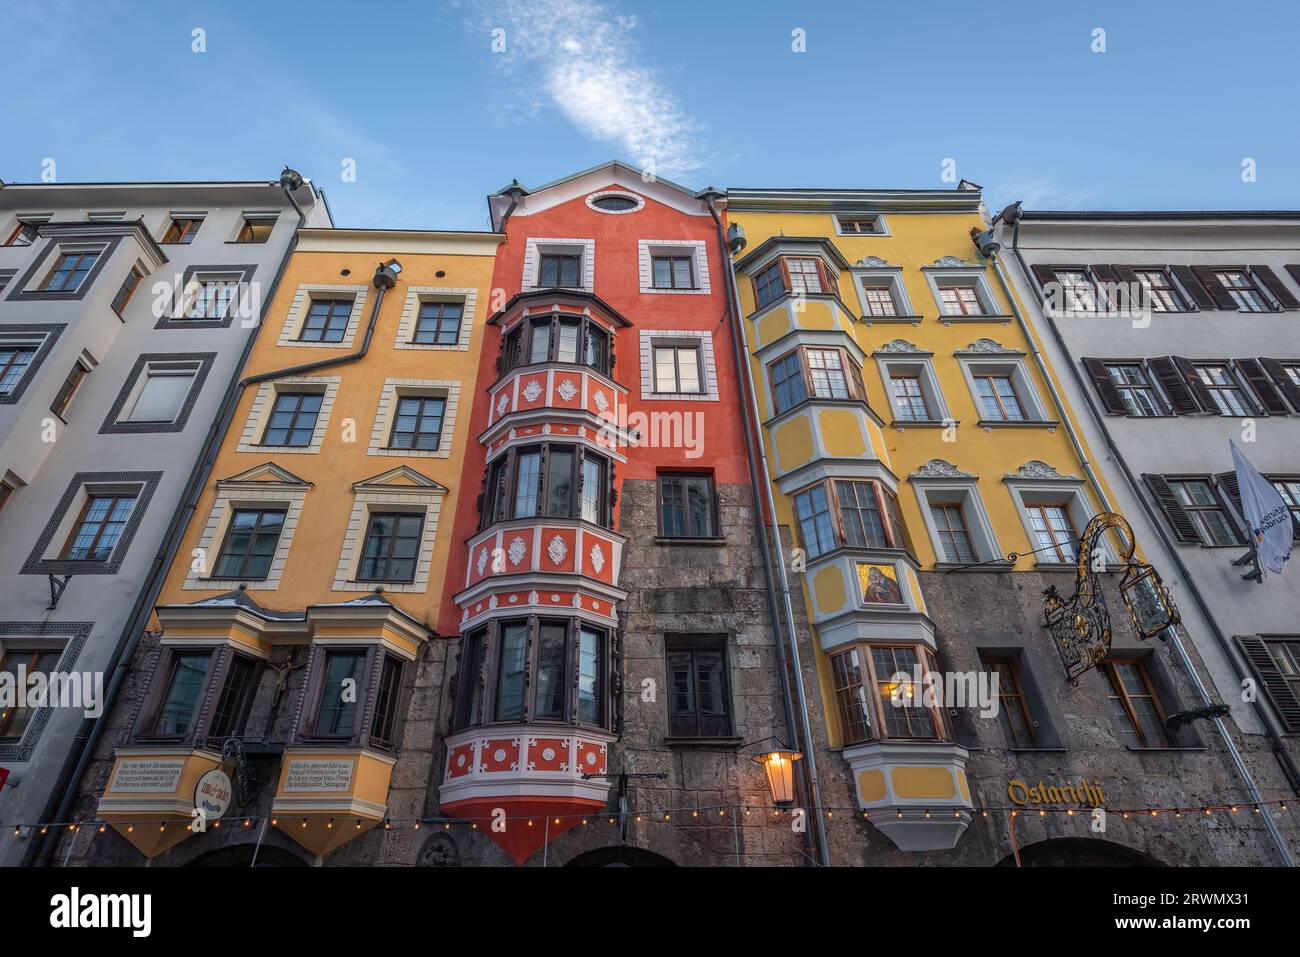 Facciate colorate della città vecchia di Innsbruck - Innsbruck, Austria Foto Stock